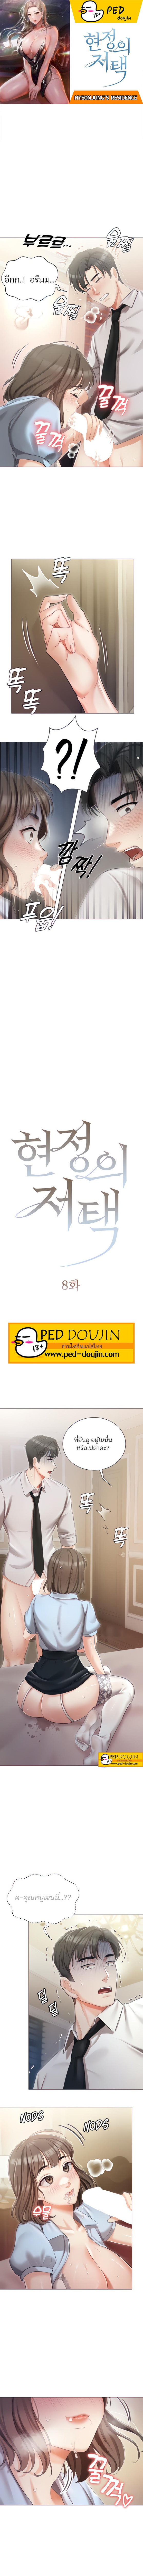 Doujin-Lc- อ่าน โดจิน มังฮวา เกาหลี ญี่ปุ่น จีน แปลไทย Hyeonjung’s Residence ตอนที่ 1 2 3 4 5 6 7 8 9 10 11 12 13 14 ฟรี ไม่มีโฆษณา อ่าน โดจิน Manhwa เกาหลี ญี่ปุ่น จีน เรามีครบ คัดมาให้เน้นๆ โดจิน 18+ รับประกันความฟินโดย  Doujin Lc